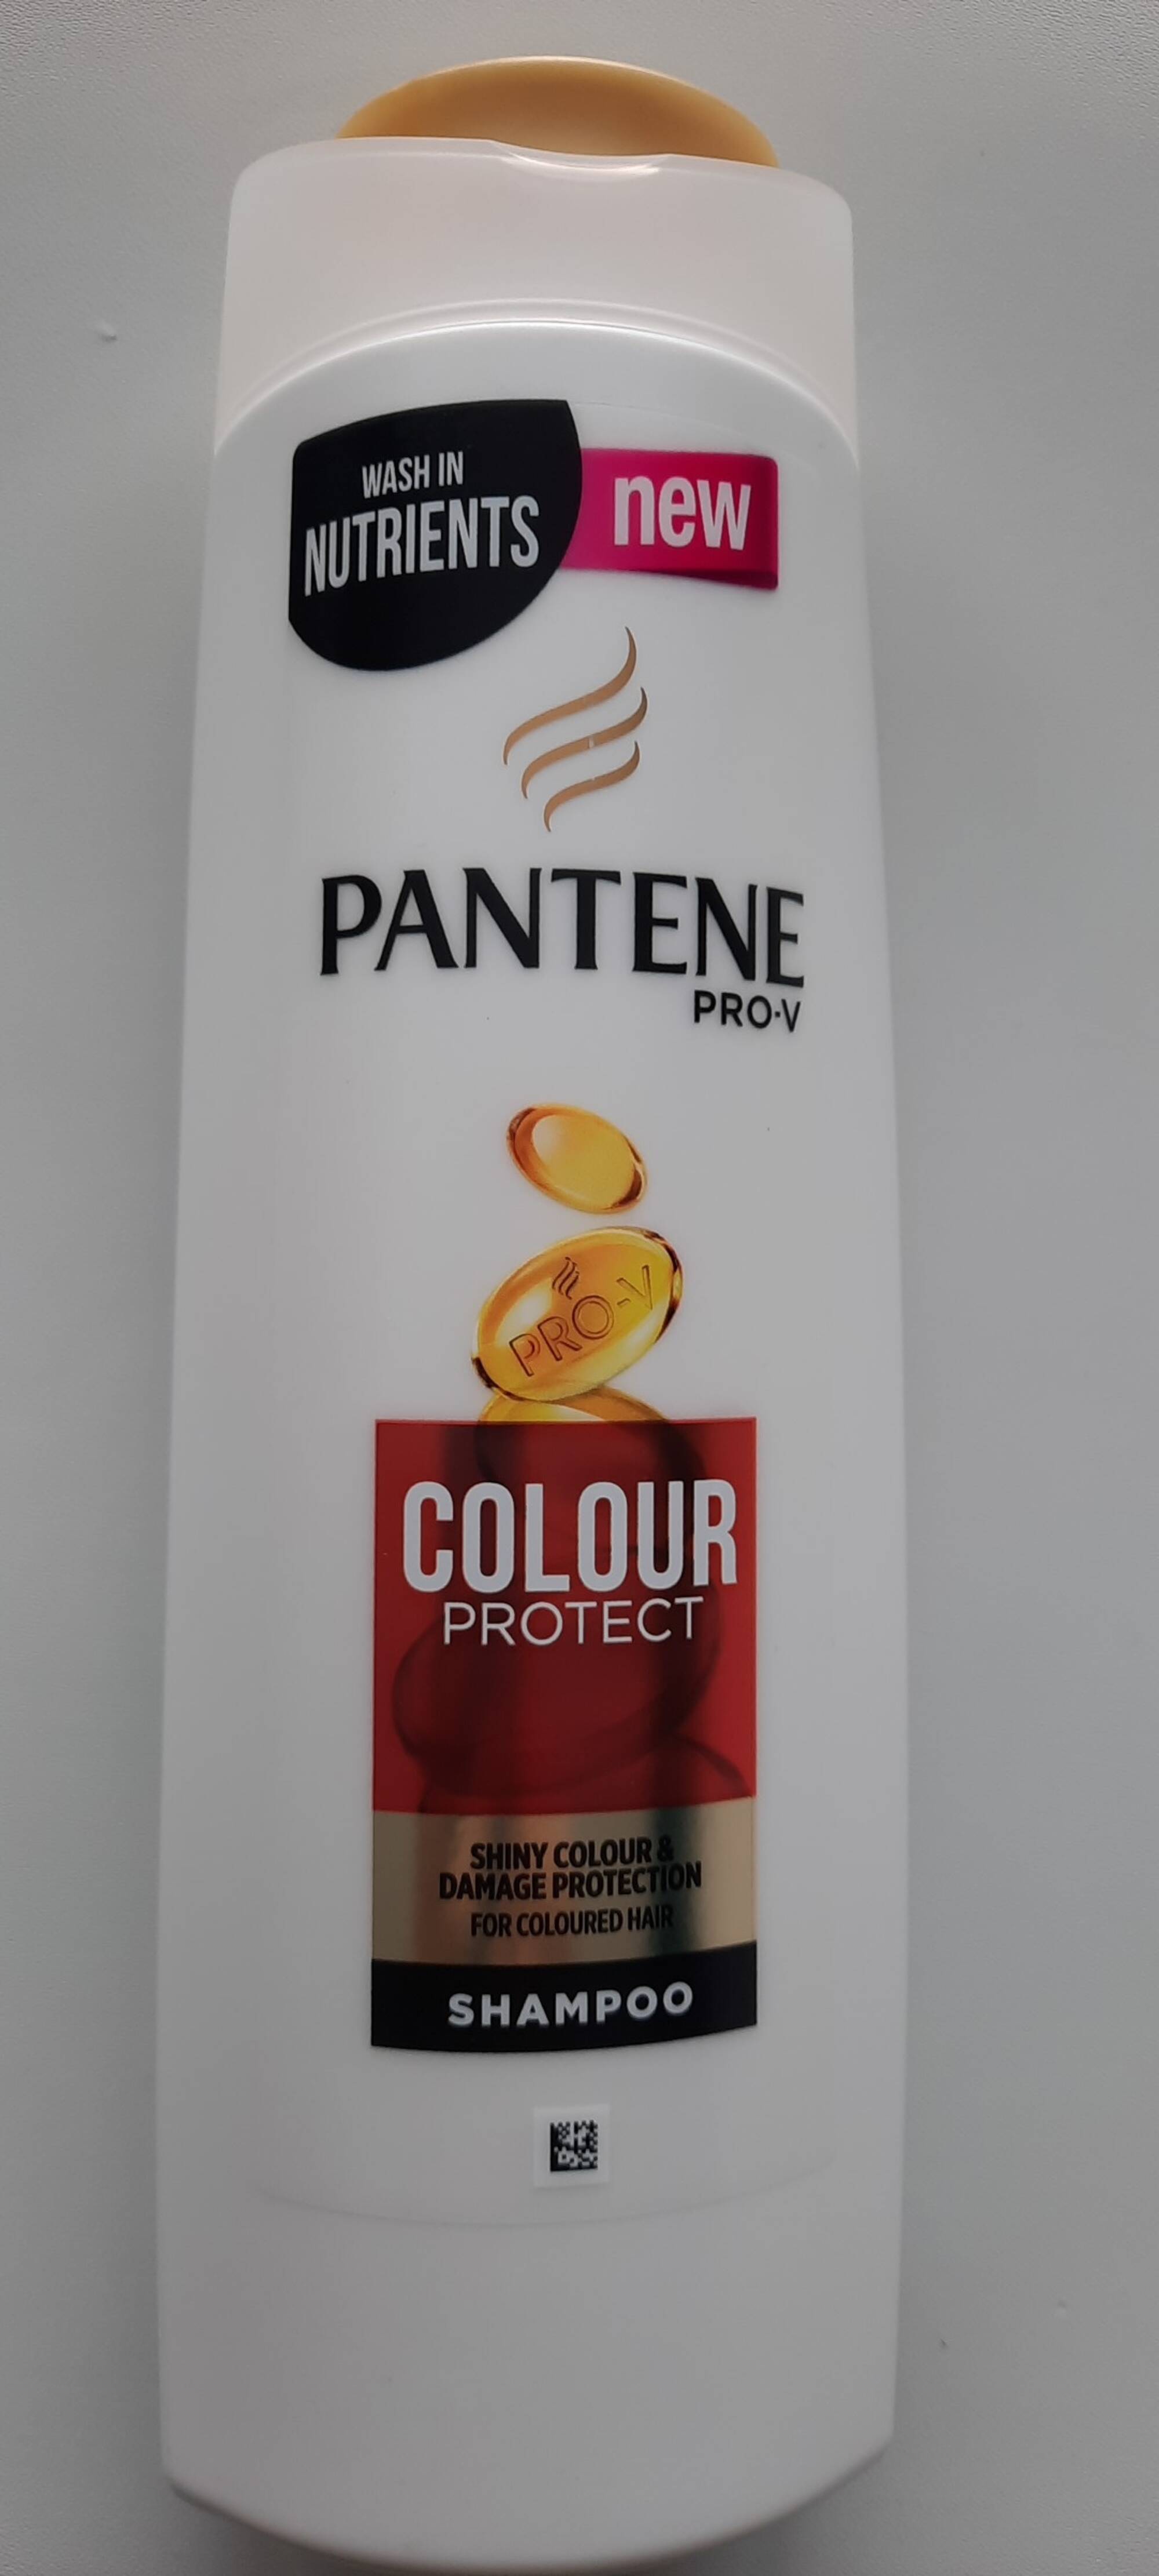 PANTENE - Colour protect - Shampoo